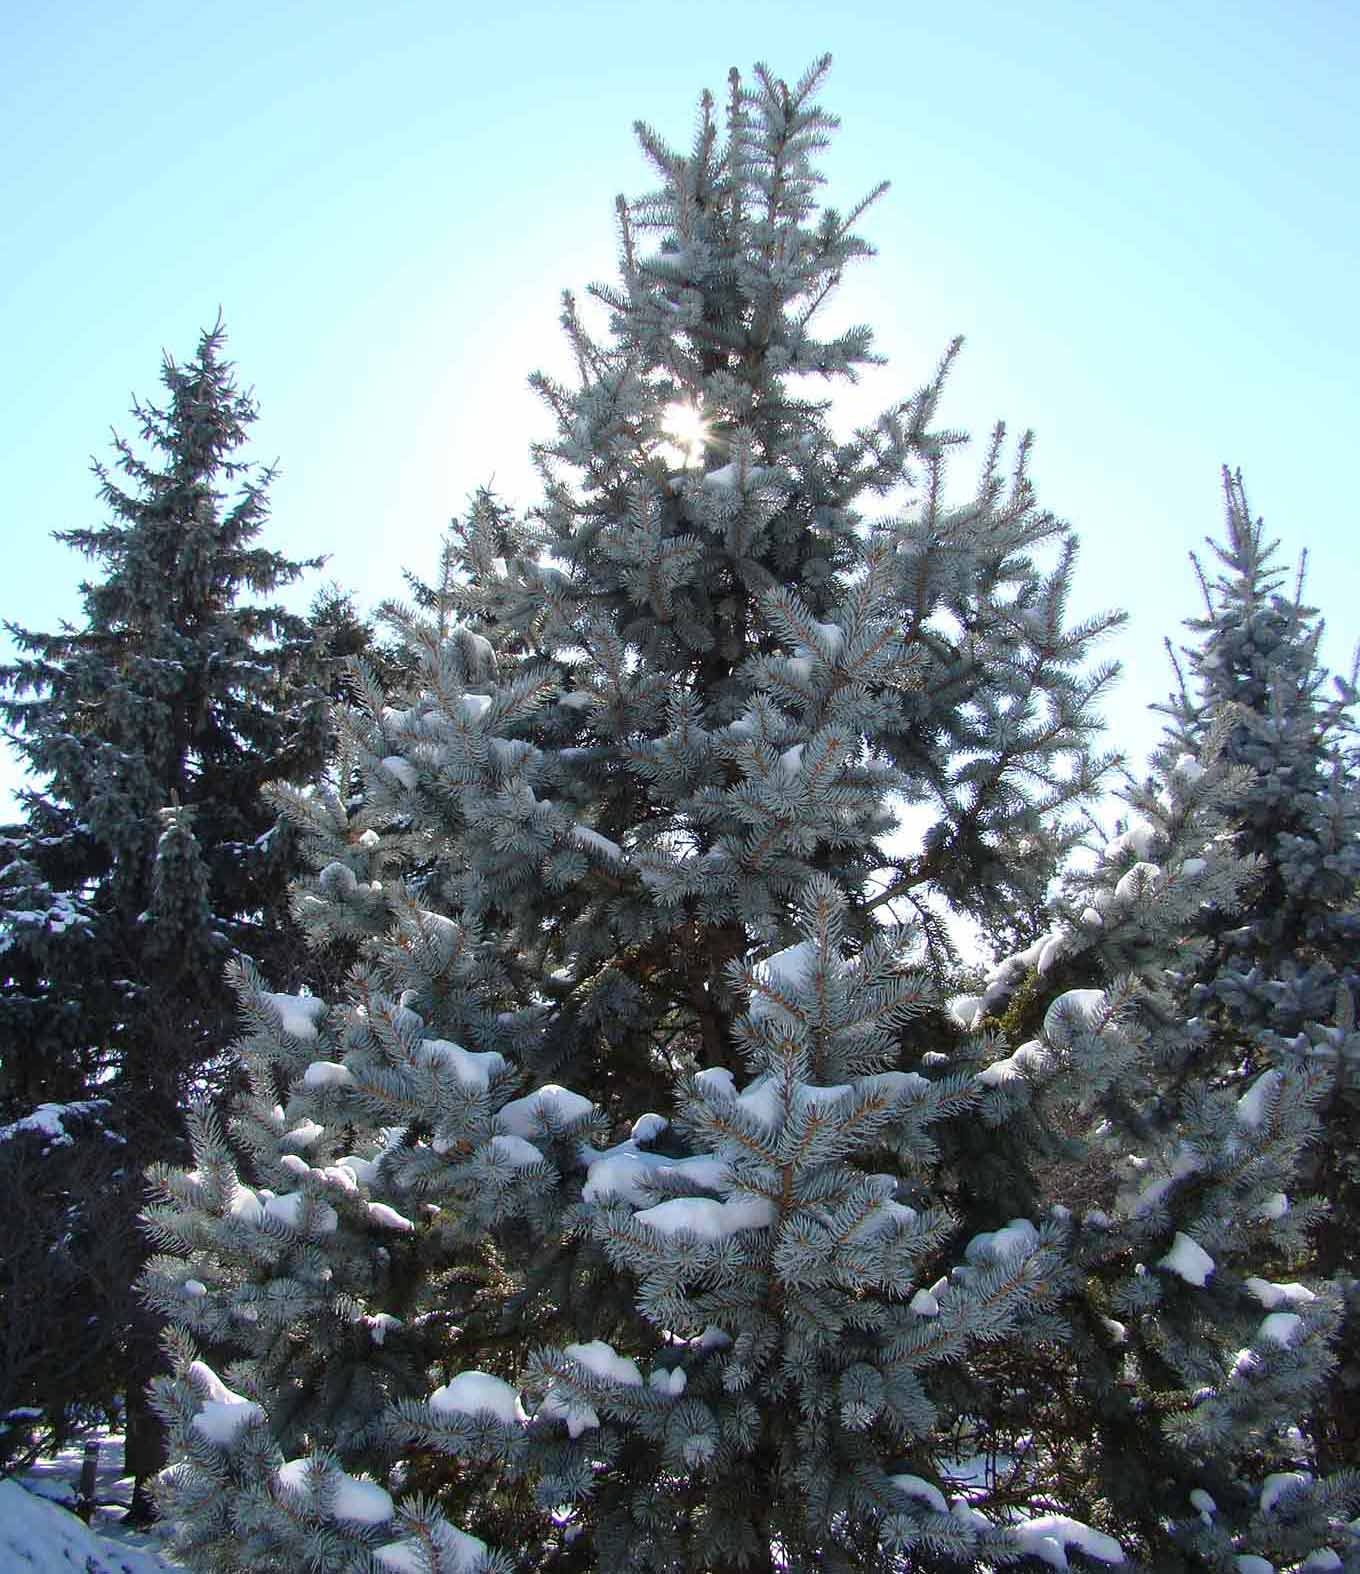 Colorado Blue Spruce at Chadwick Arboretum and Learning Gardens, The Ohio State University, Columbus, Ohio